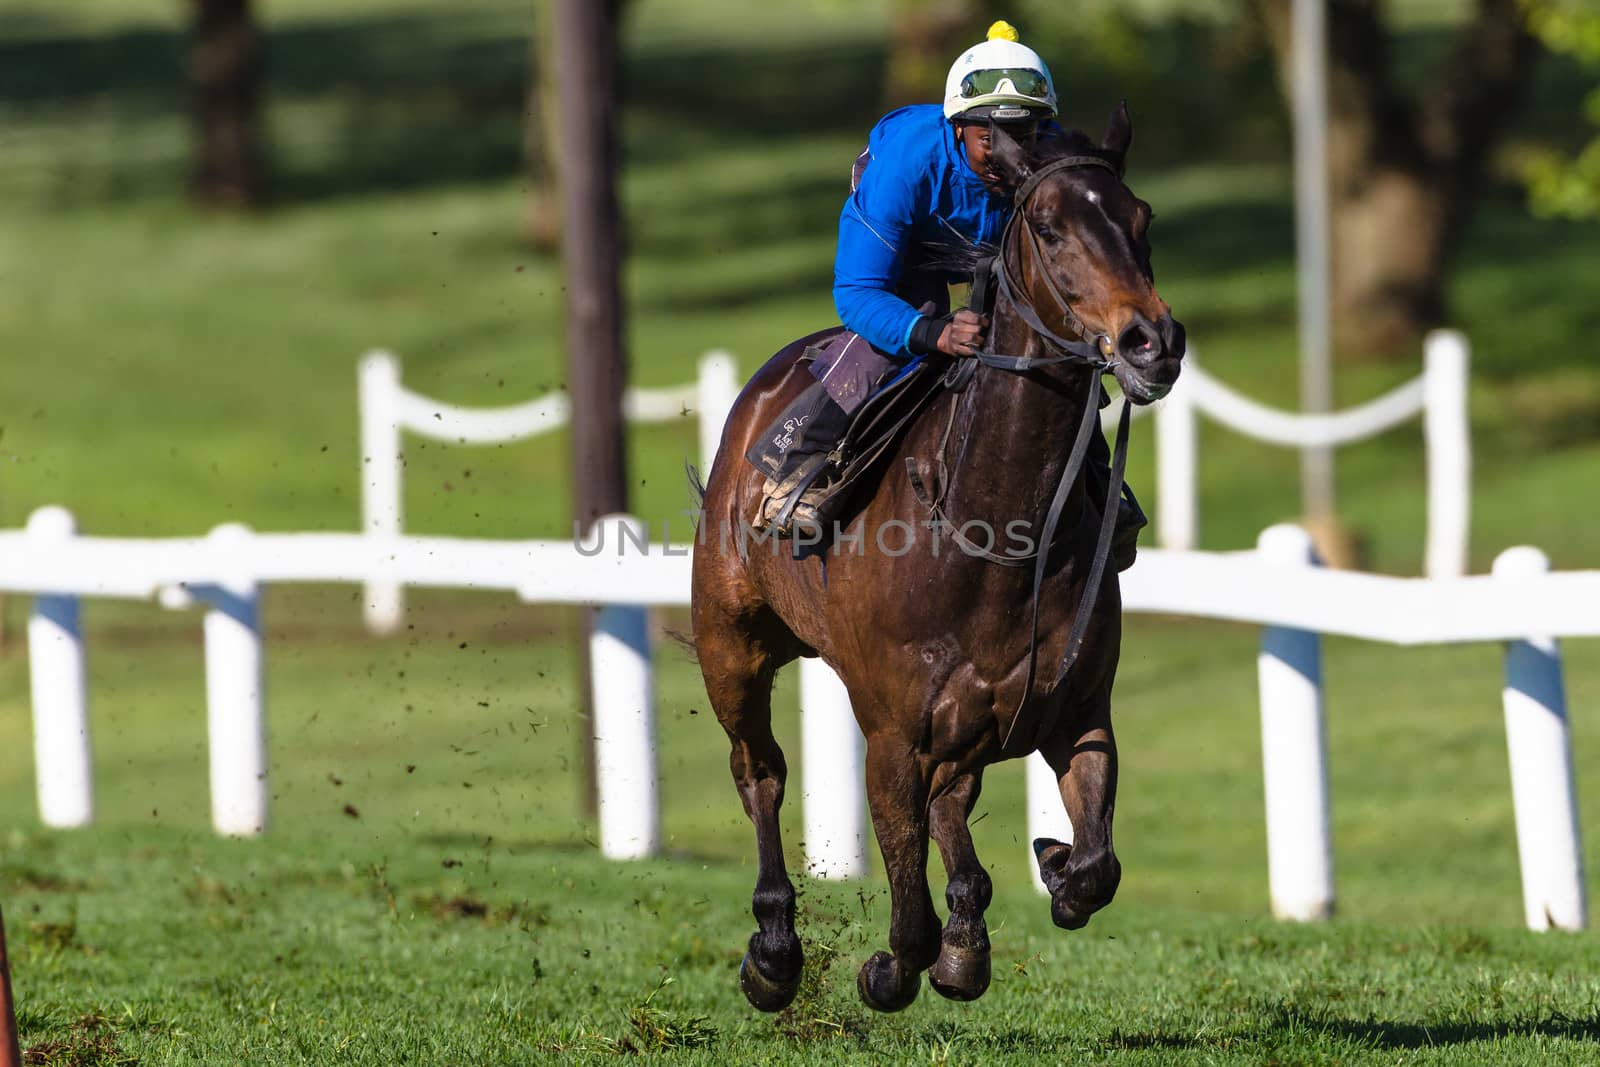 Jockey riding race horse galloping on grass track training